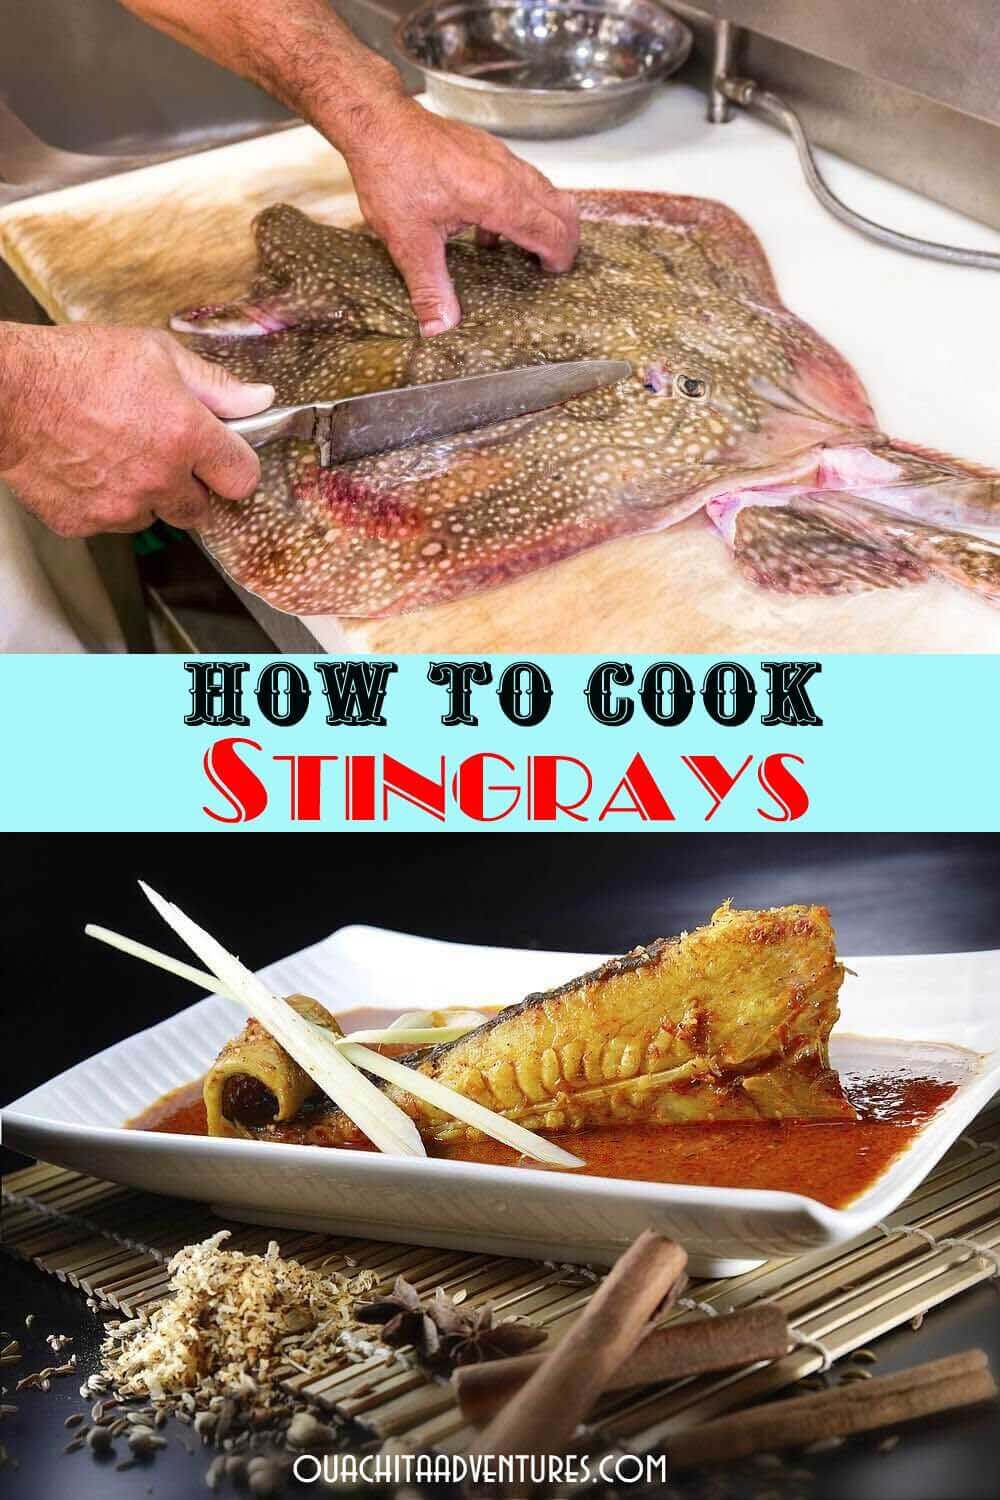 How to cook Stingrays